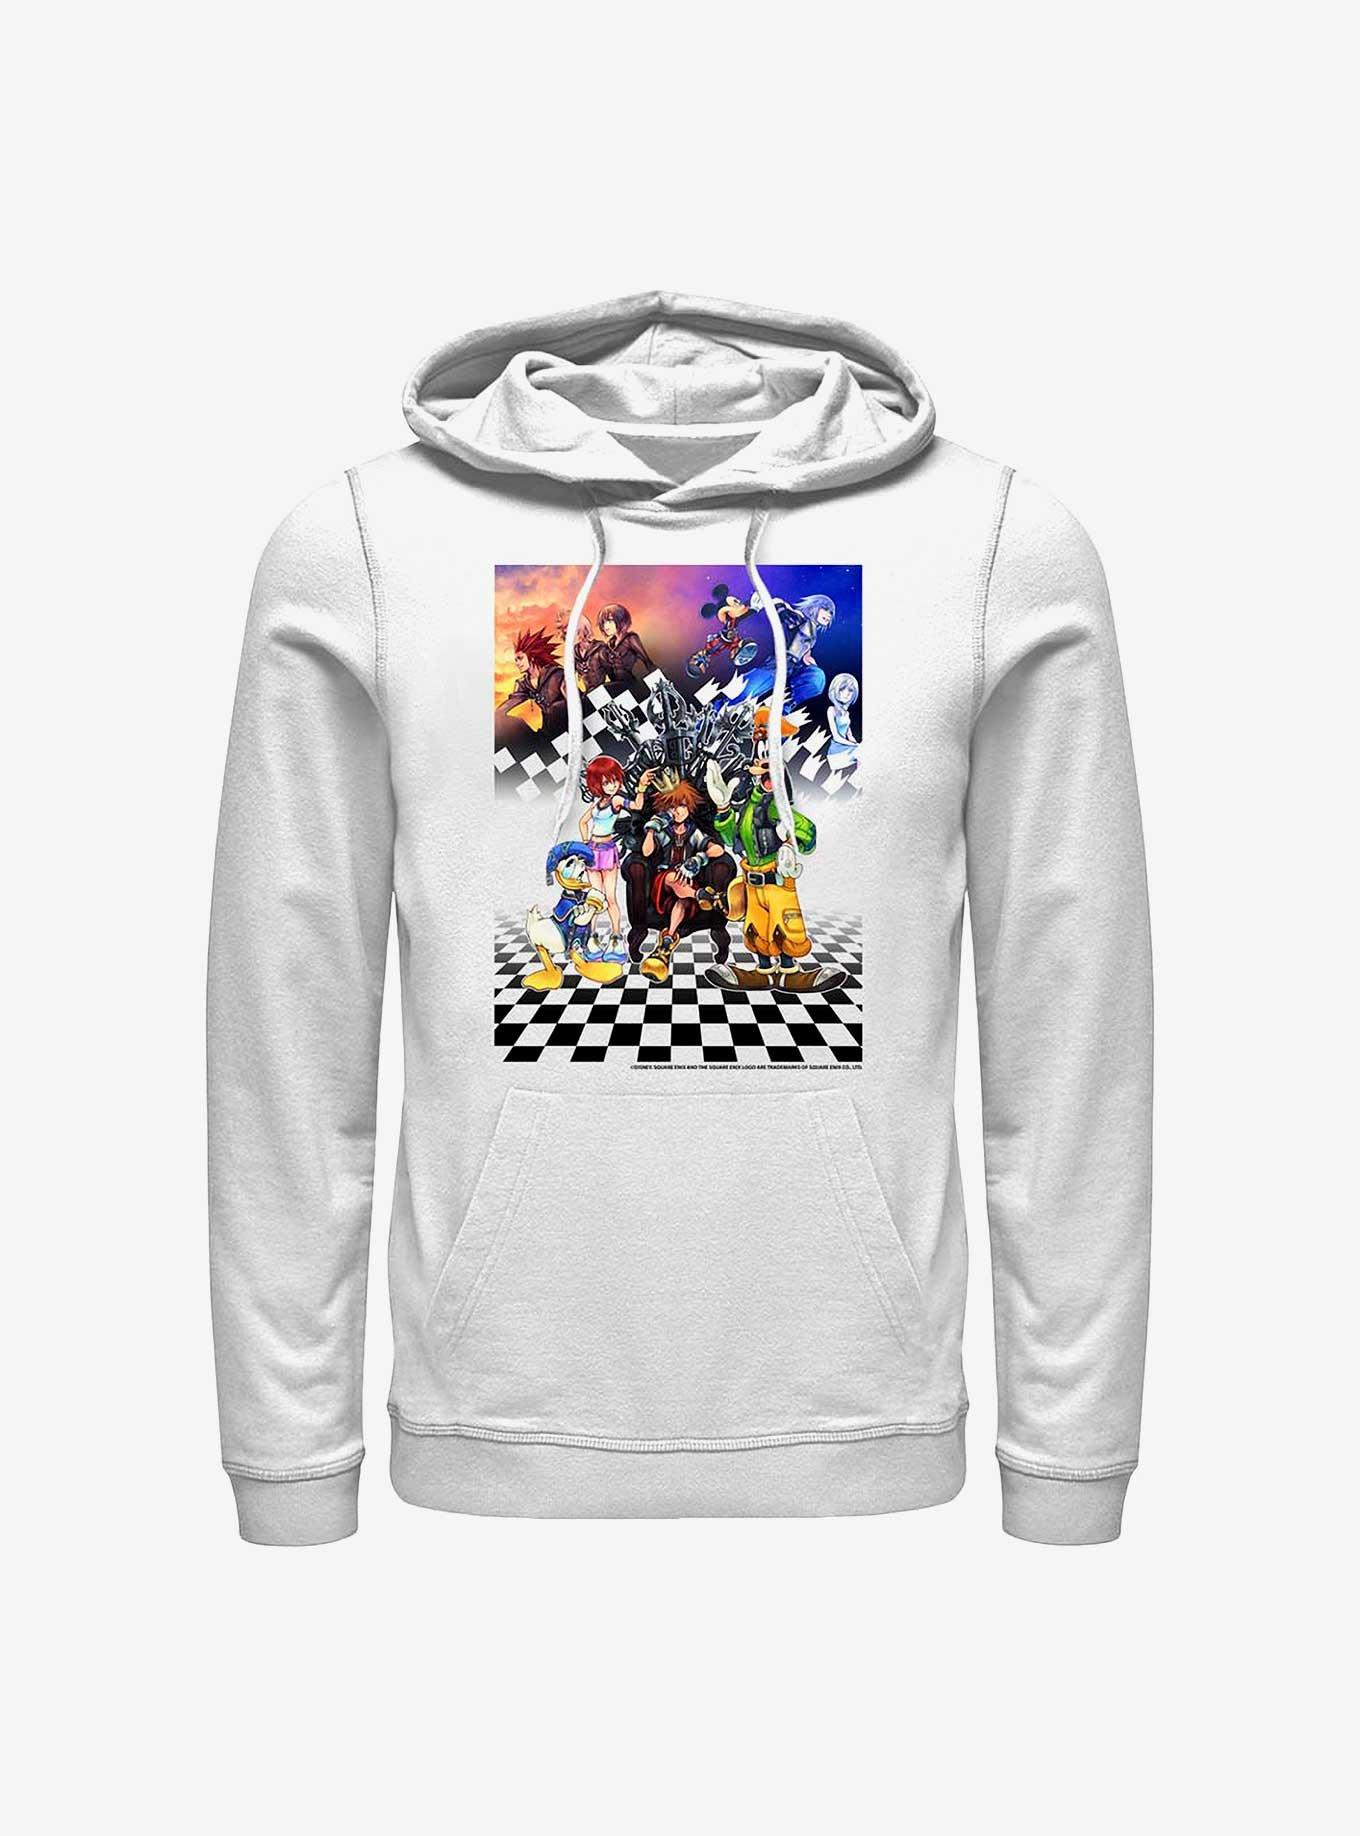 Disney Kingdom Hearts Group Checkers Hoodie, WHITE, hi-res